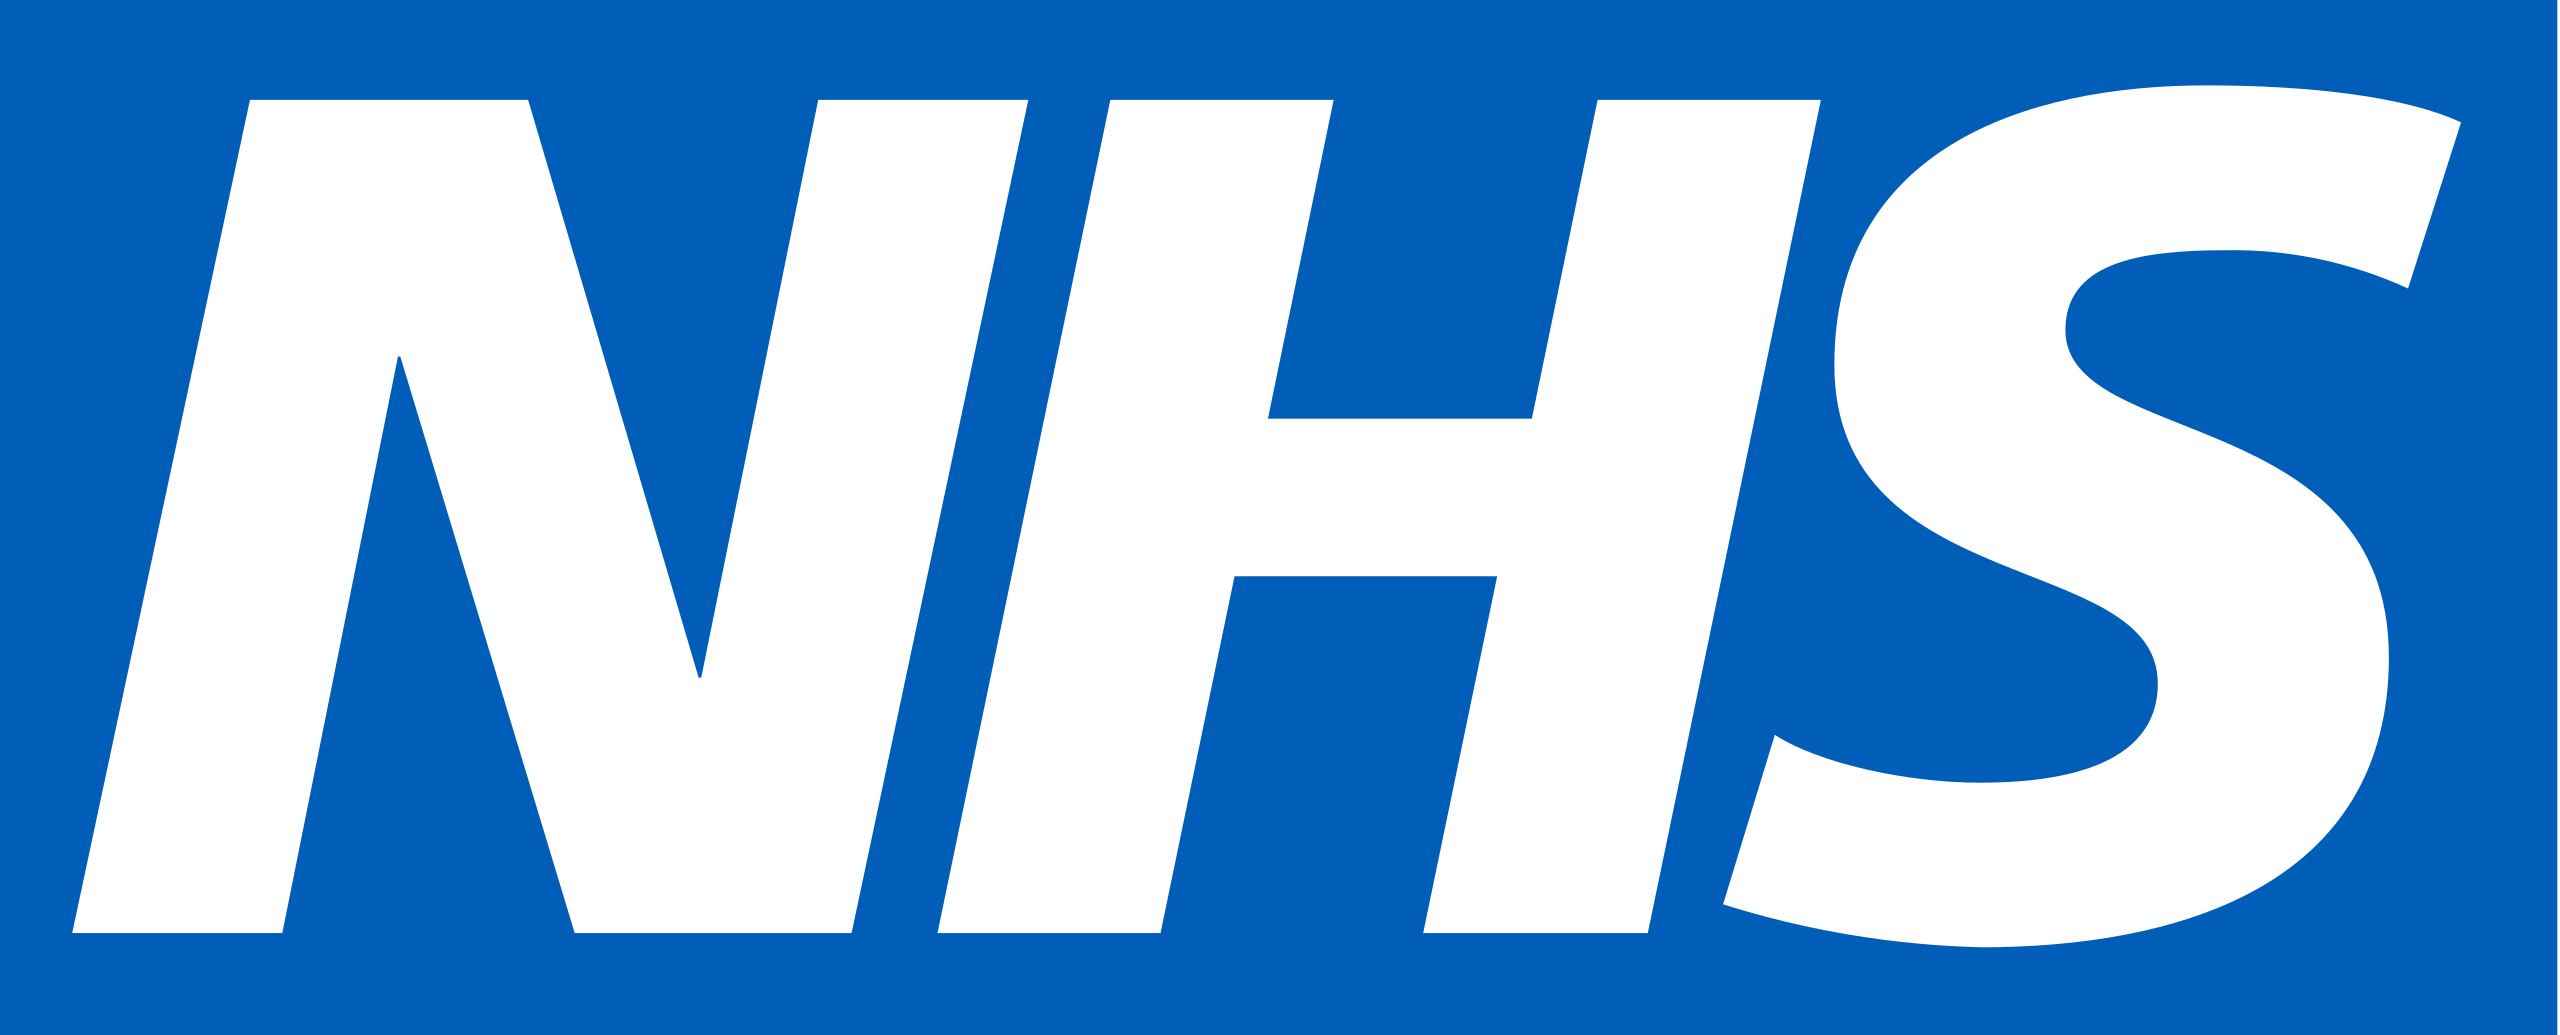 National Health Service England